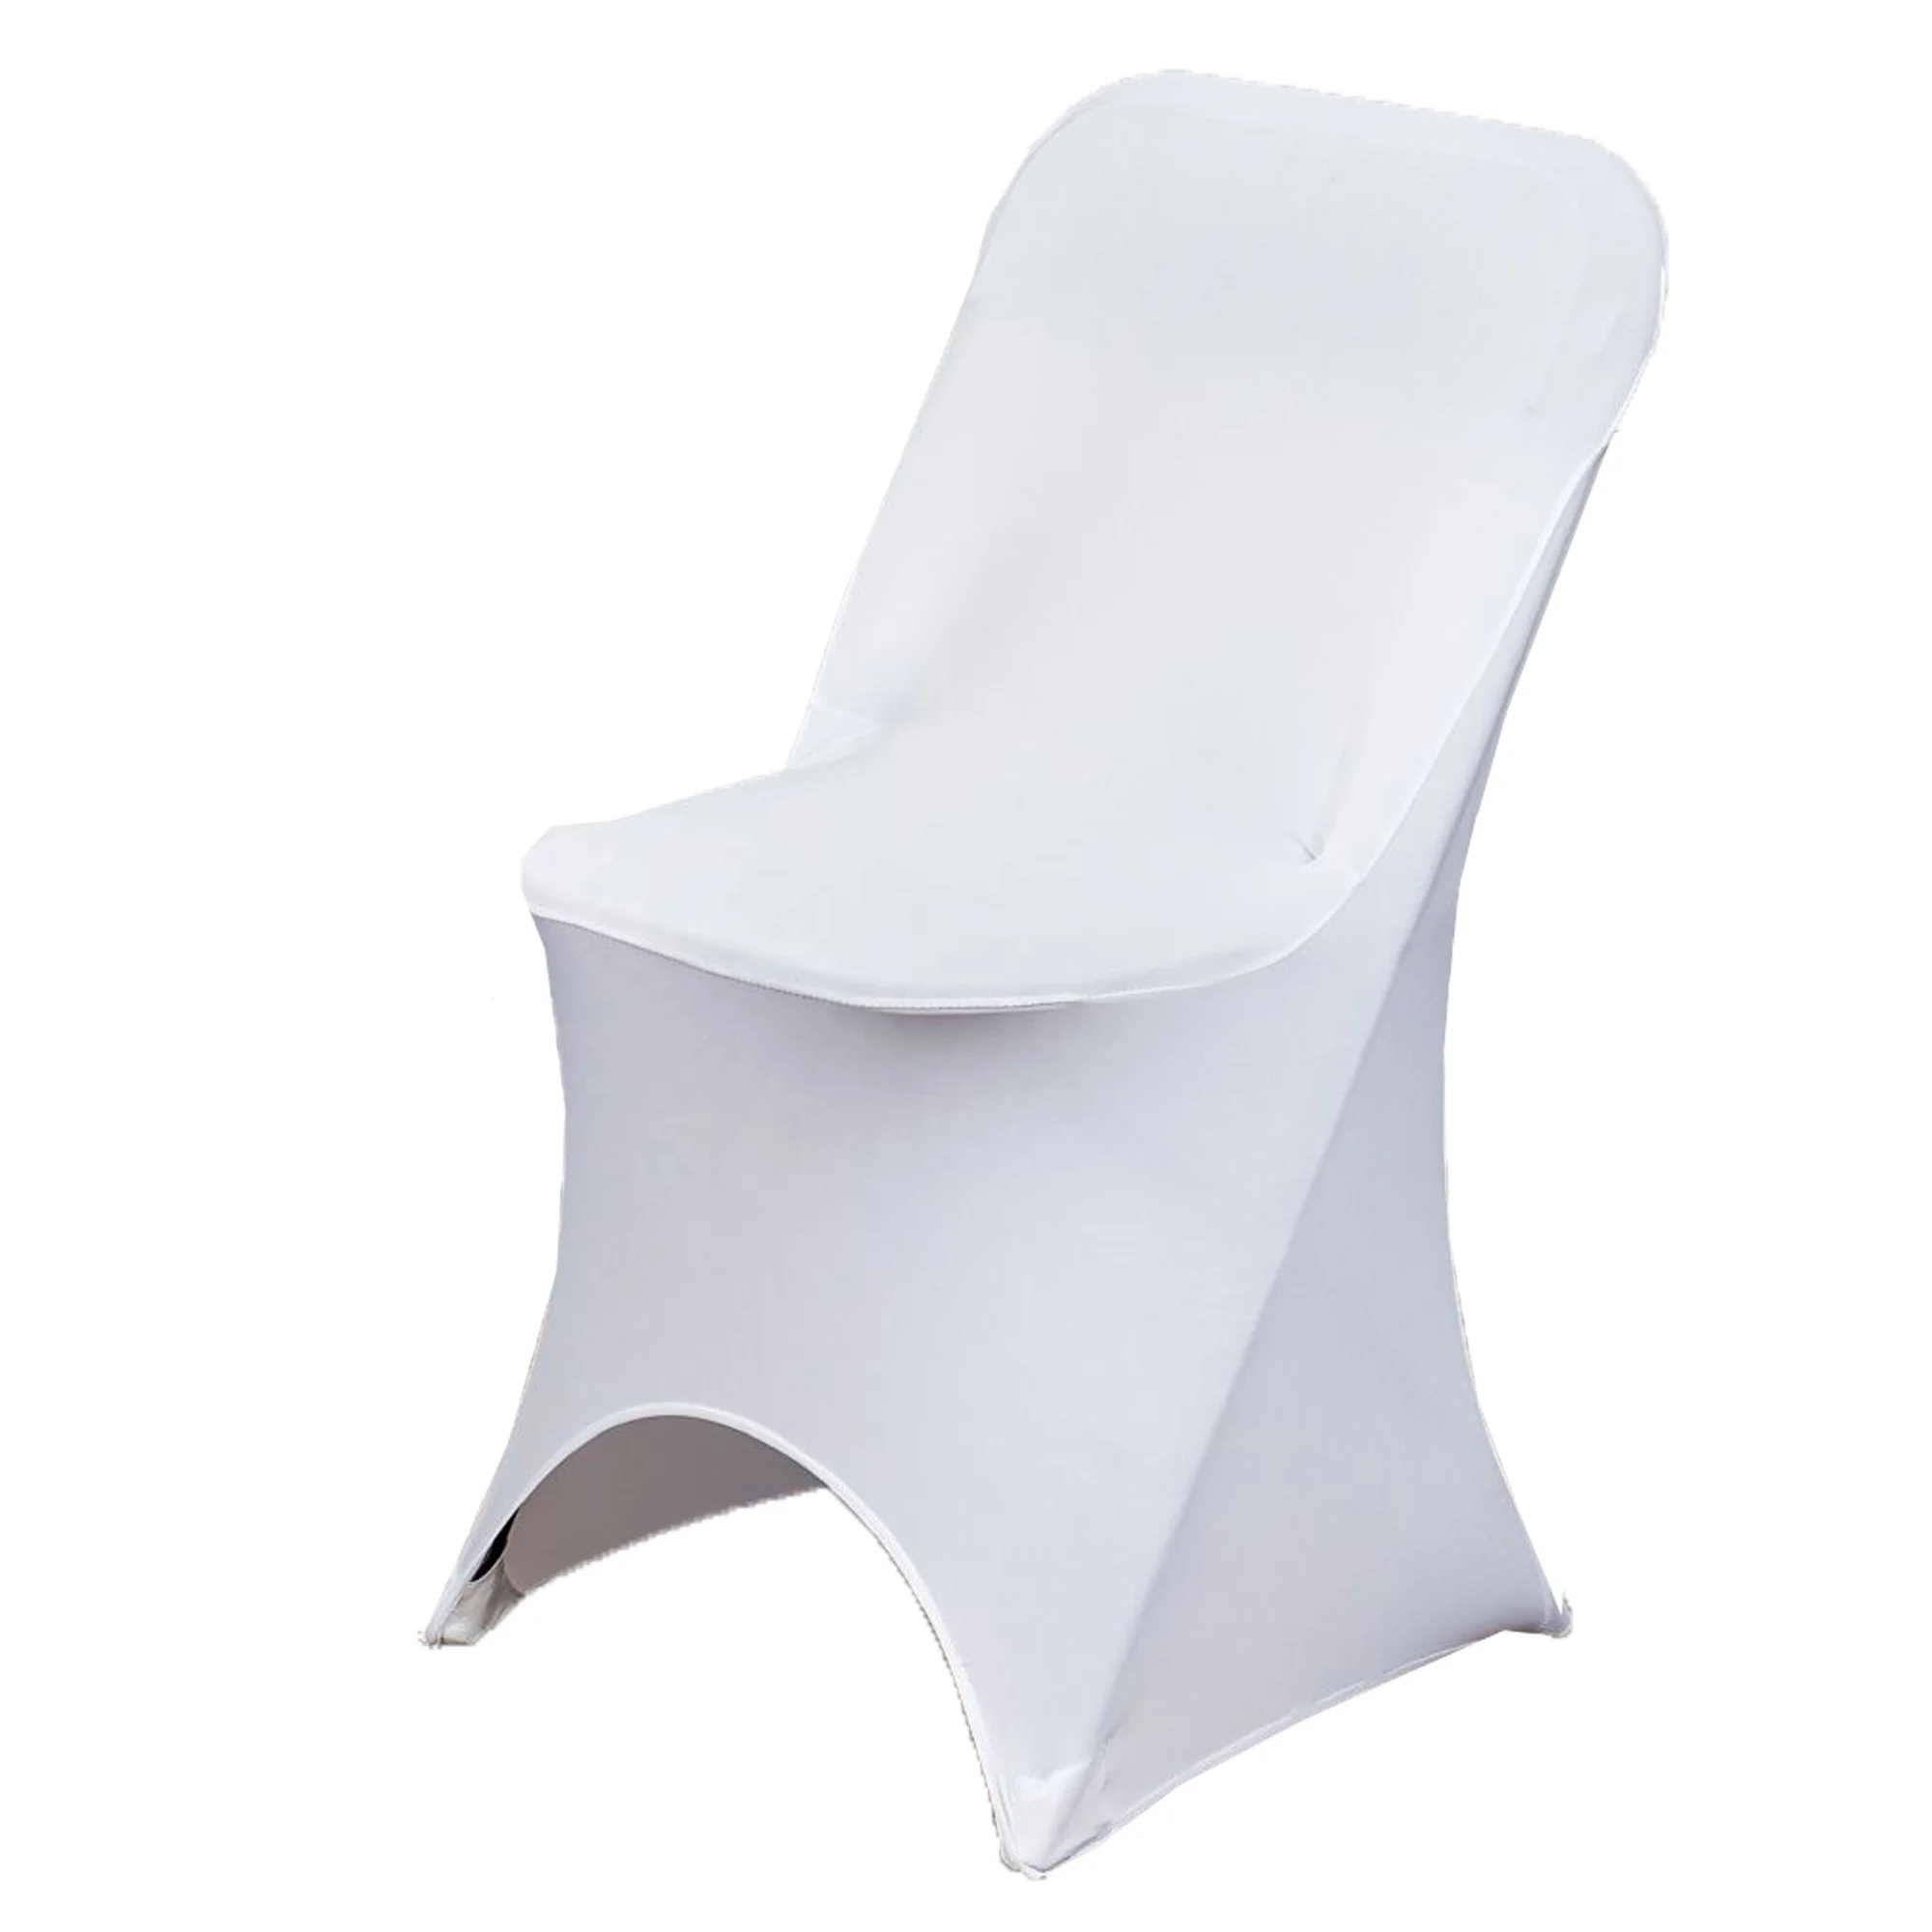 Hot wholesale elegant wedding banquet event hotel spandex folding chair skirt chair cover chair cloth